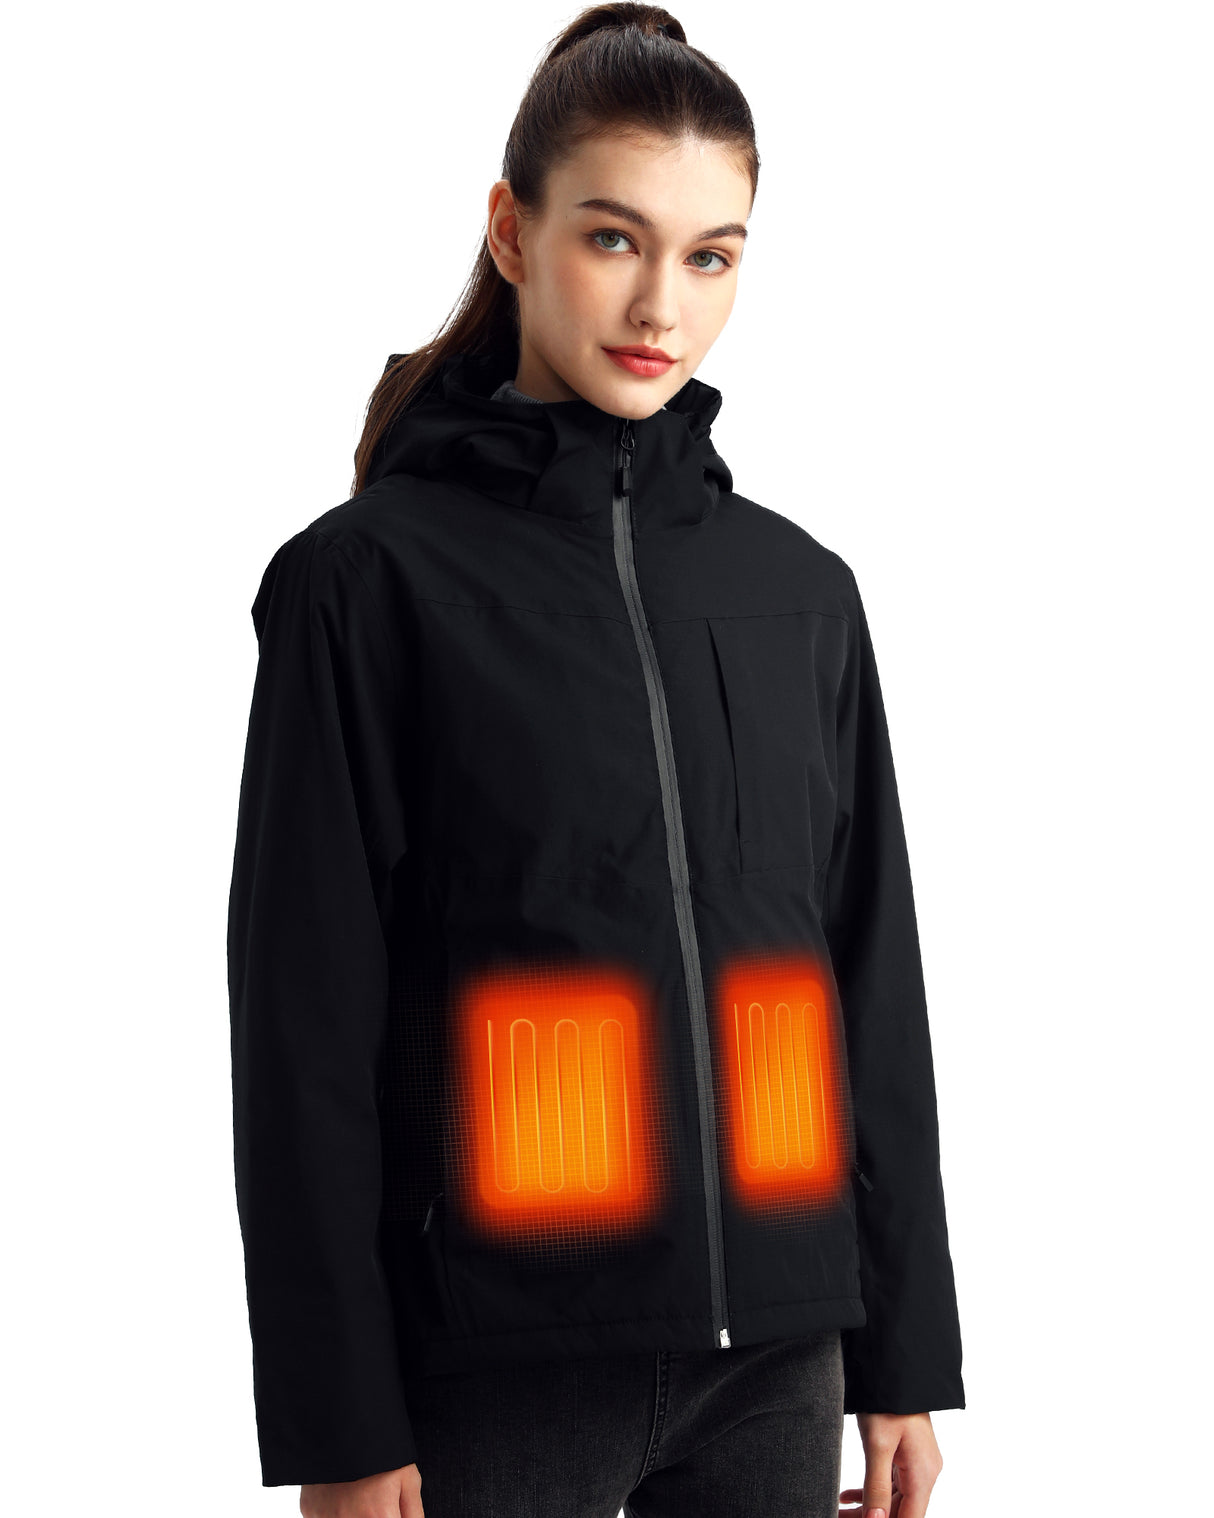 Women’s Heated Jacket